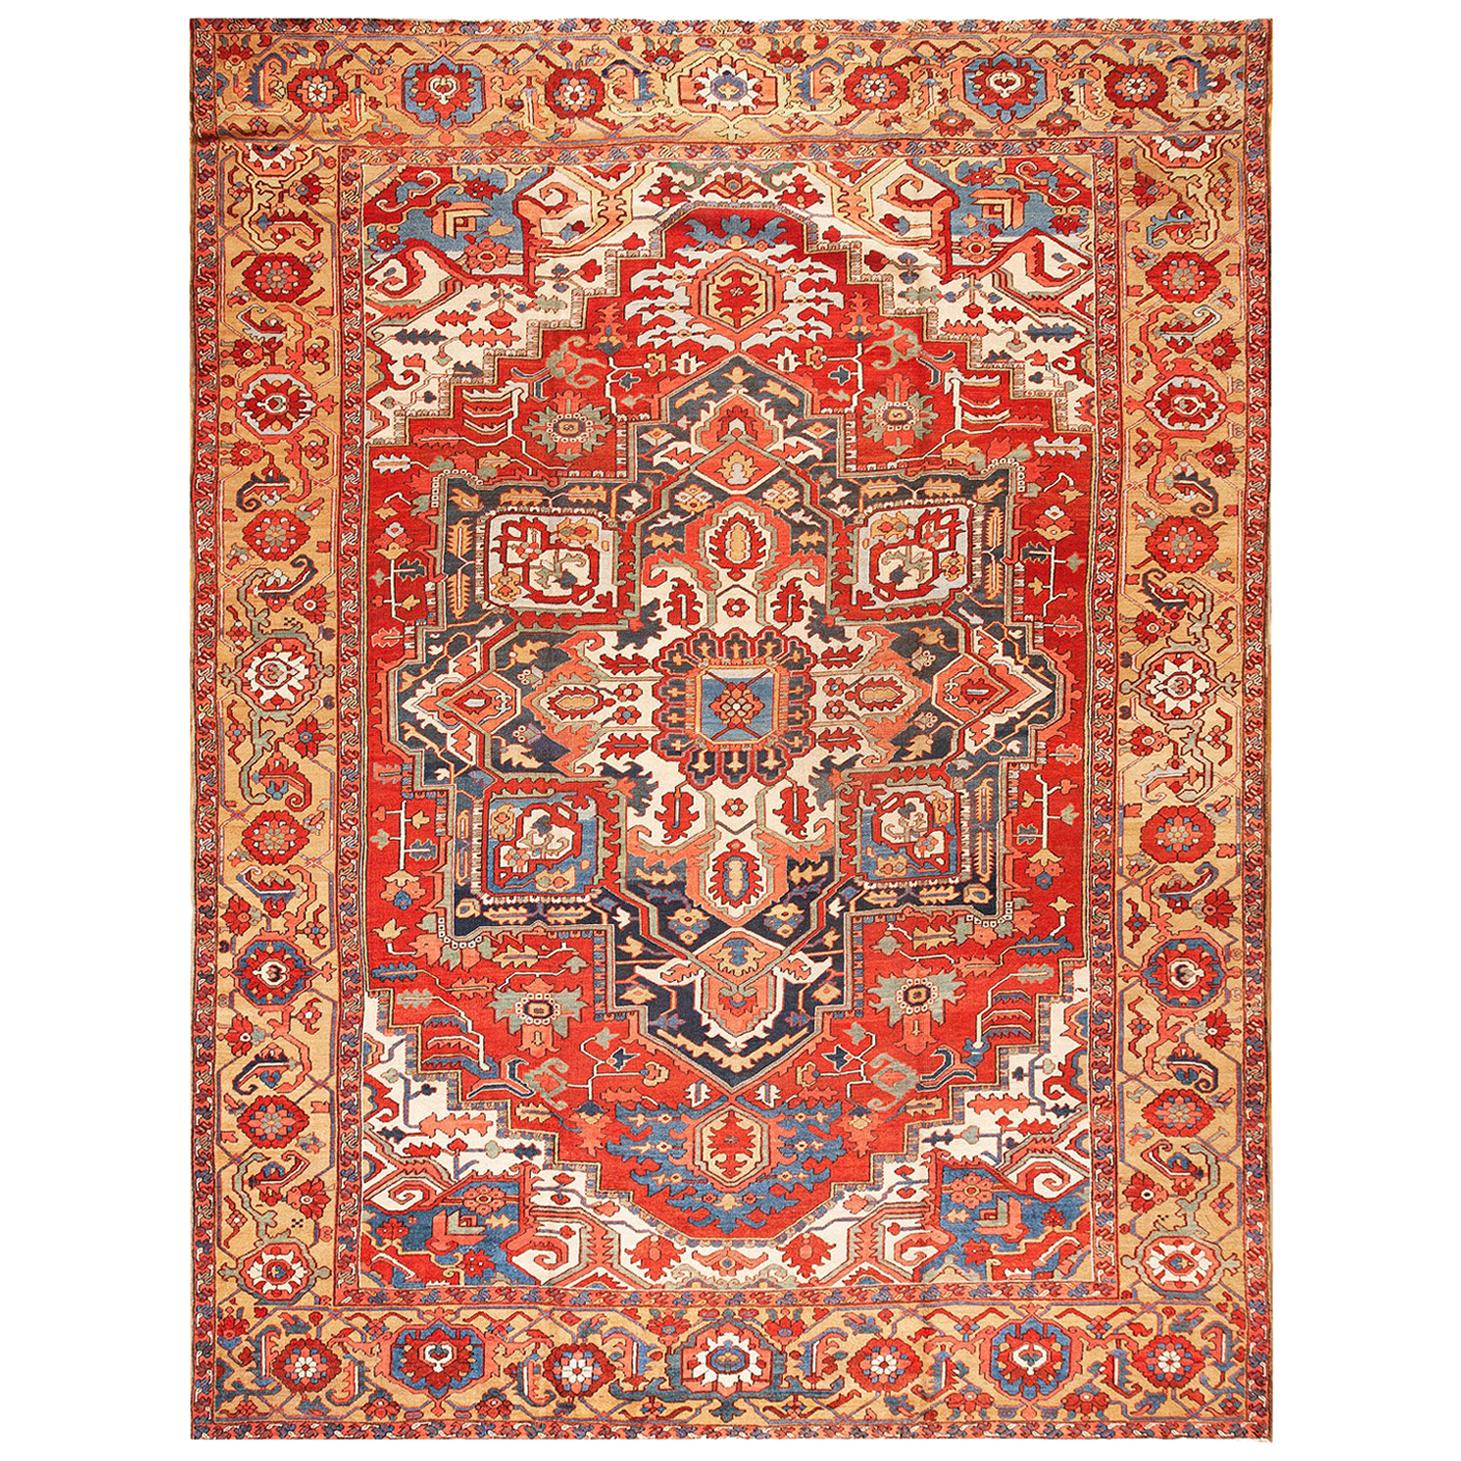 Late 19th Century Persian Heriz Carpet ( 11'6" x 15'8" - 350 x 477 ) For Sale